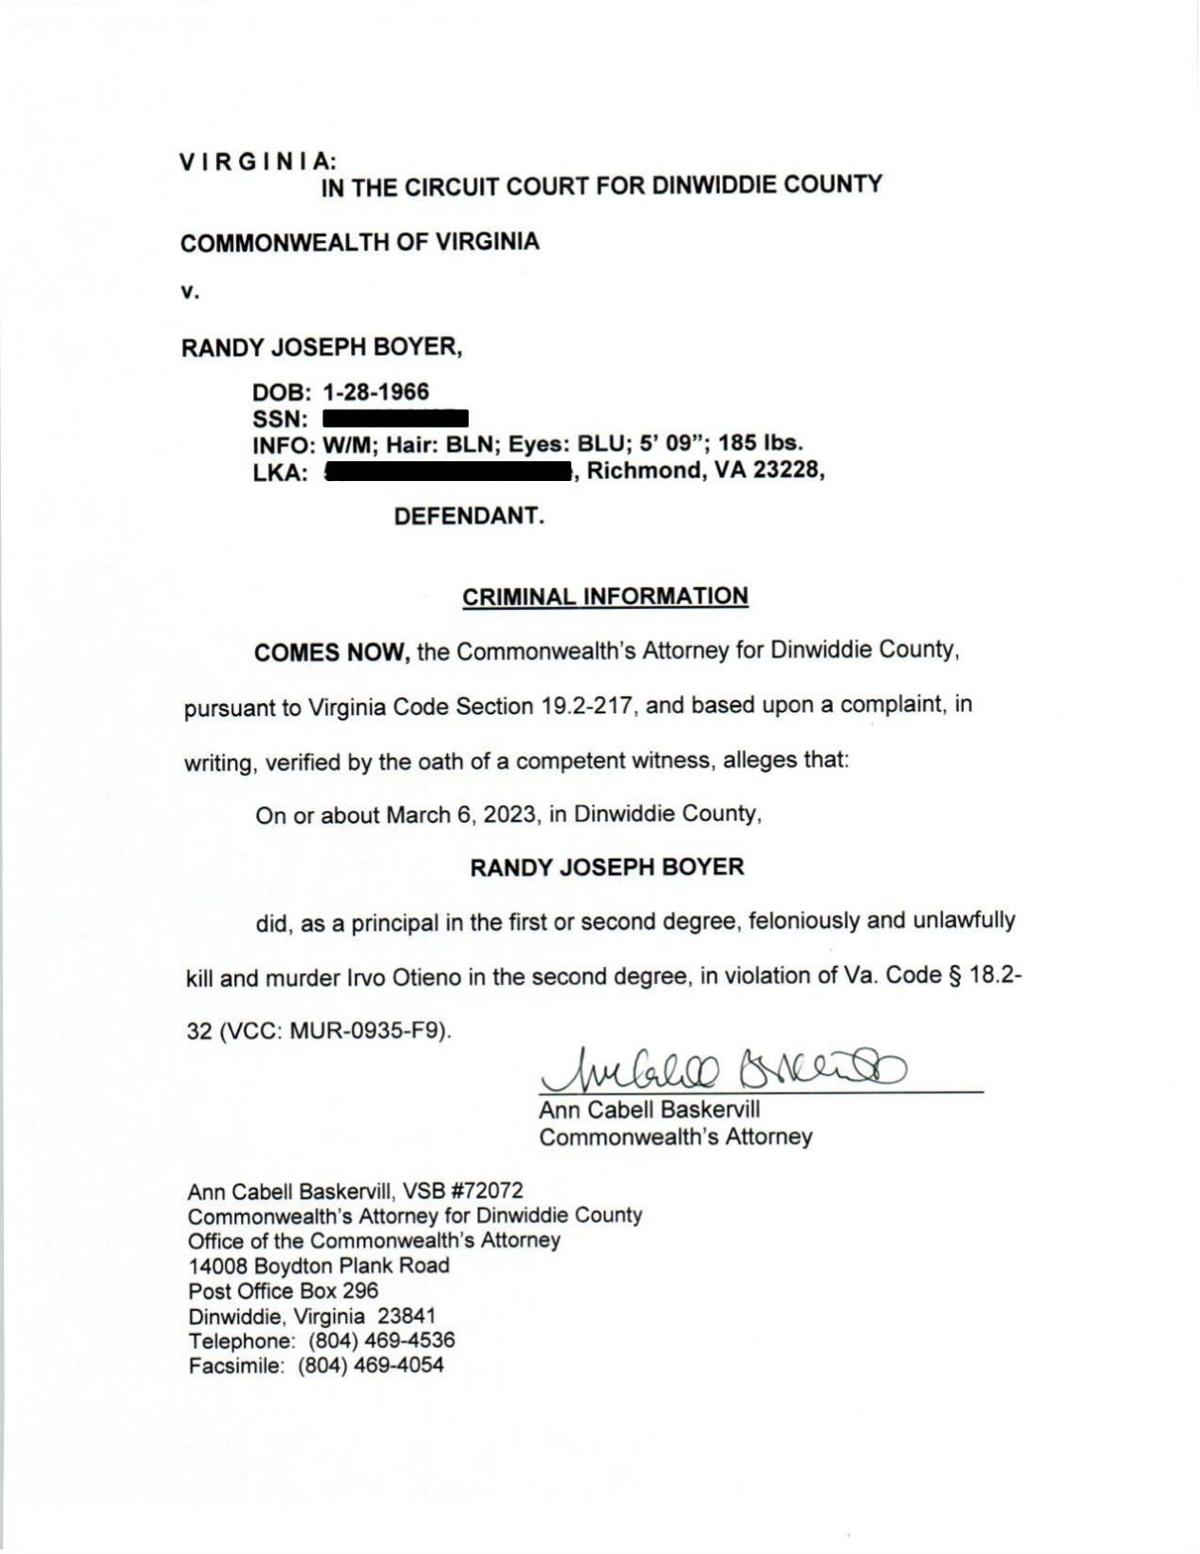 Court documents